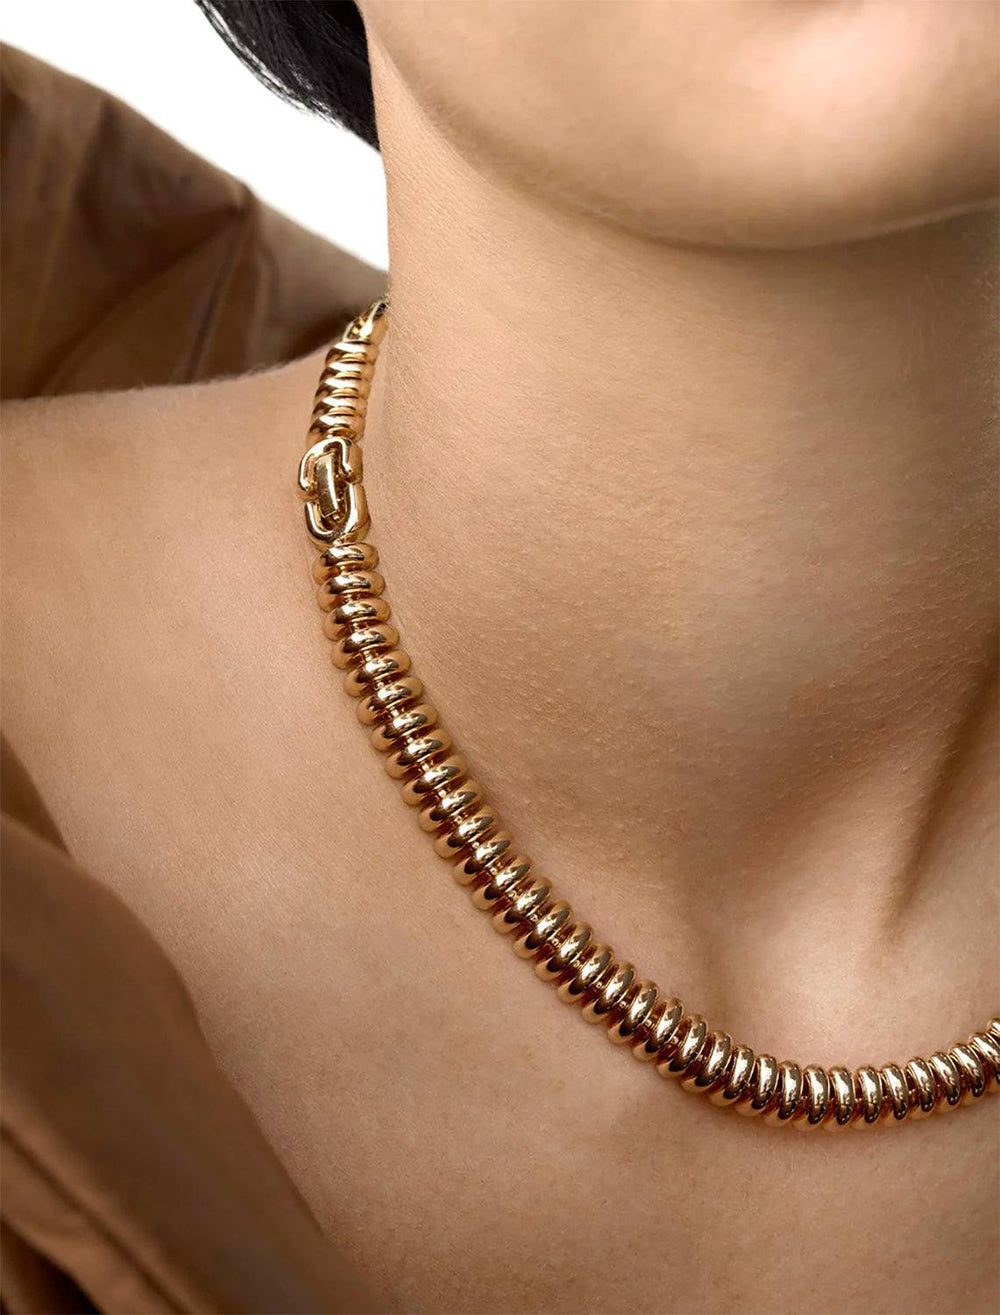 Model wearing Jenny Bird's Sofia Choker Necklace in Gold Tone Dipped Brass.